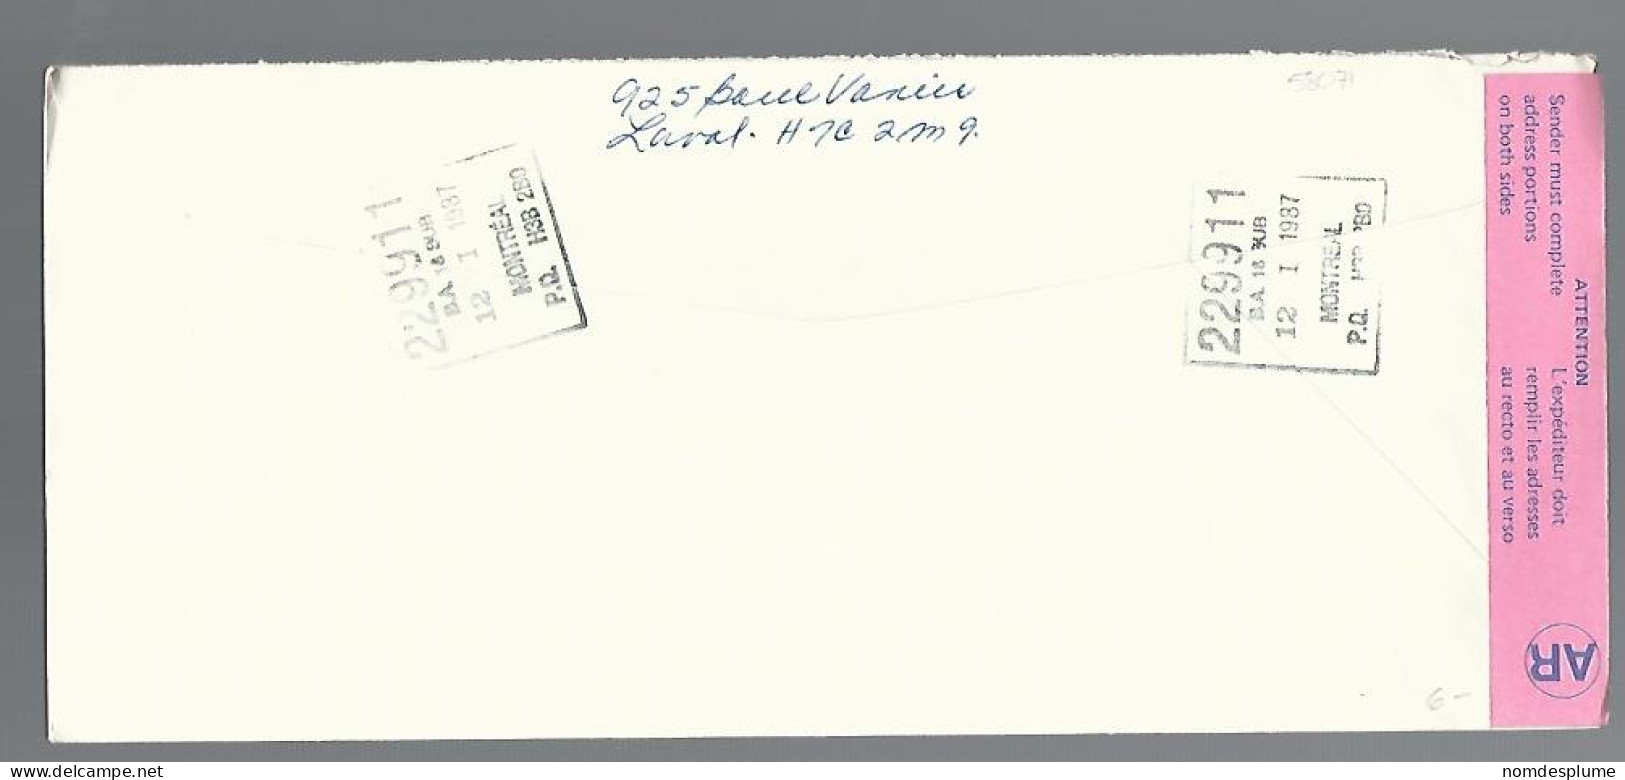 58071) Canada  AR  Registered Montreal Postmark Cancel 1987  - Registration & Officially Sealed